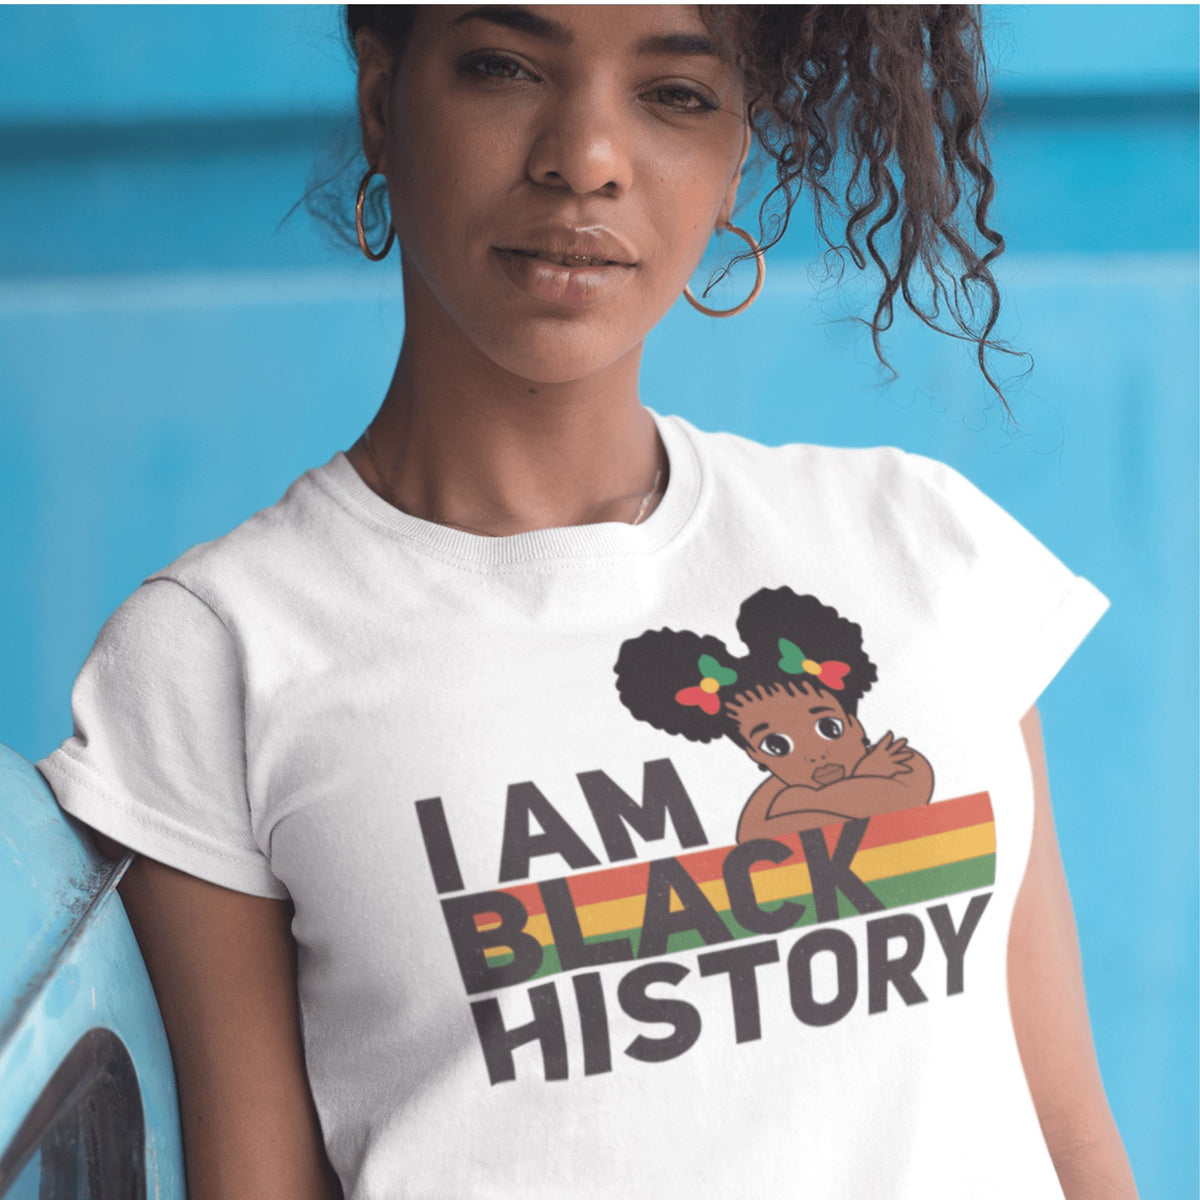 I Am Black History T-Shirt For Women - Eventwisecreations